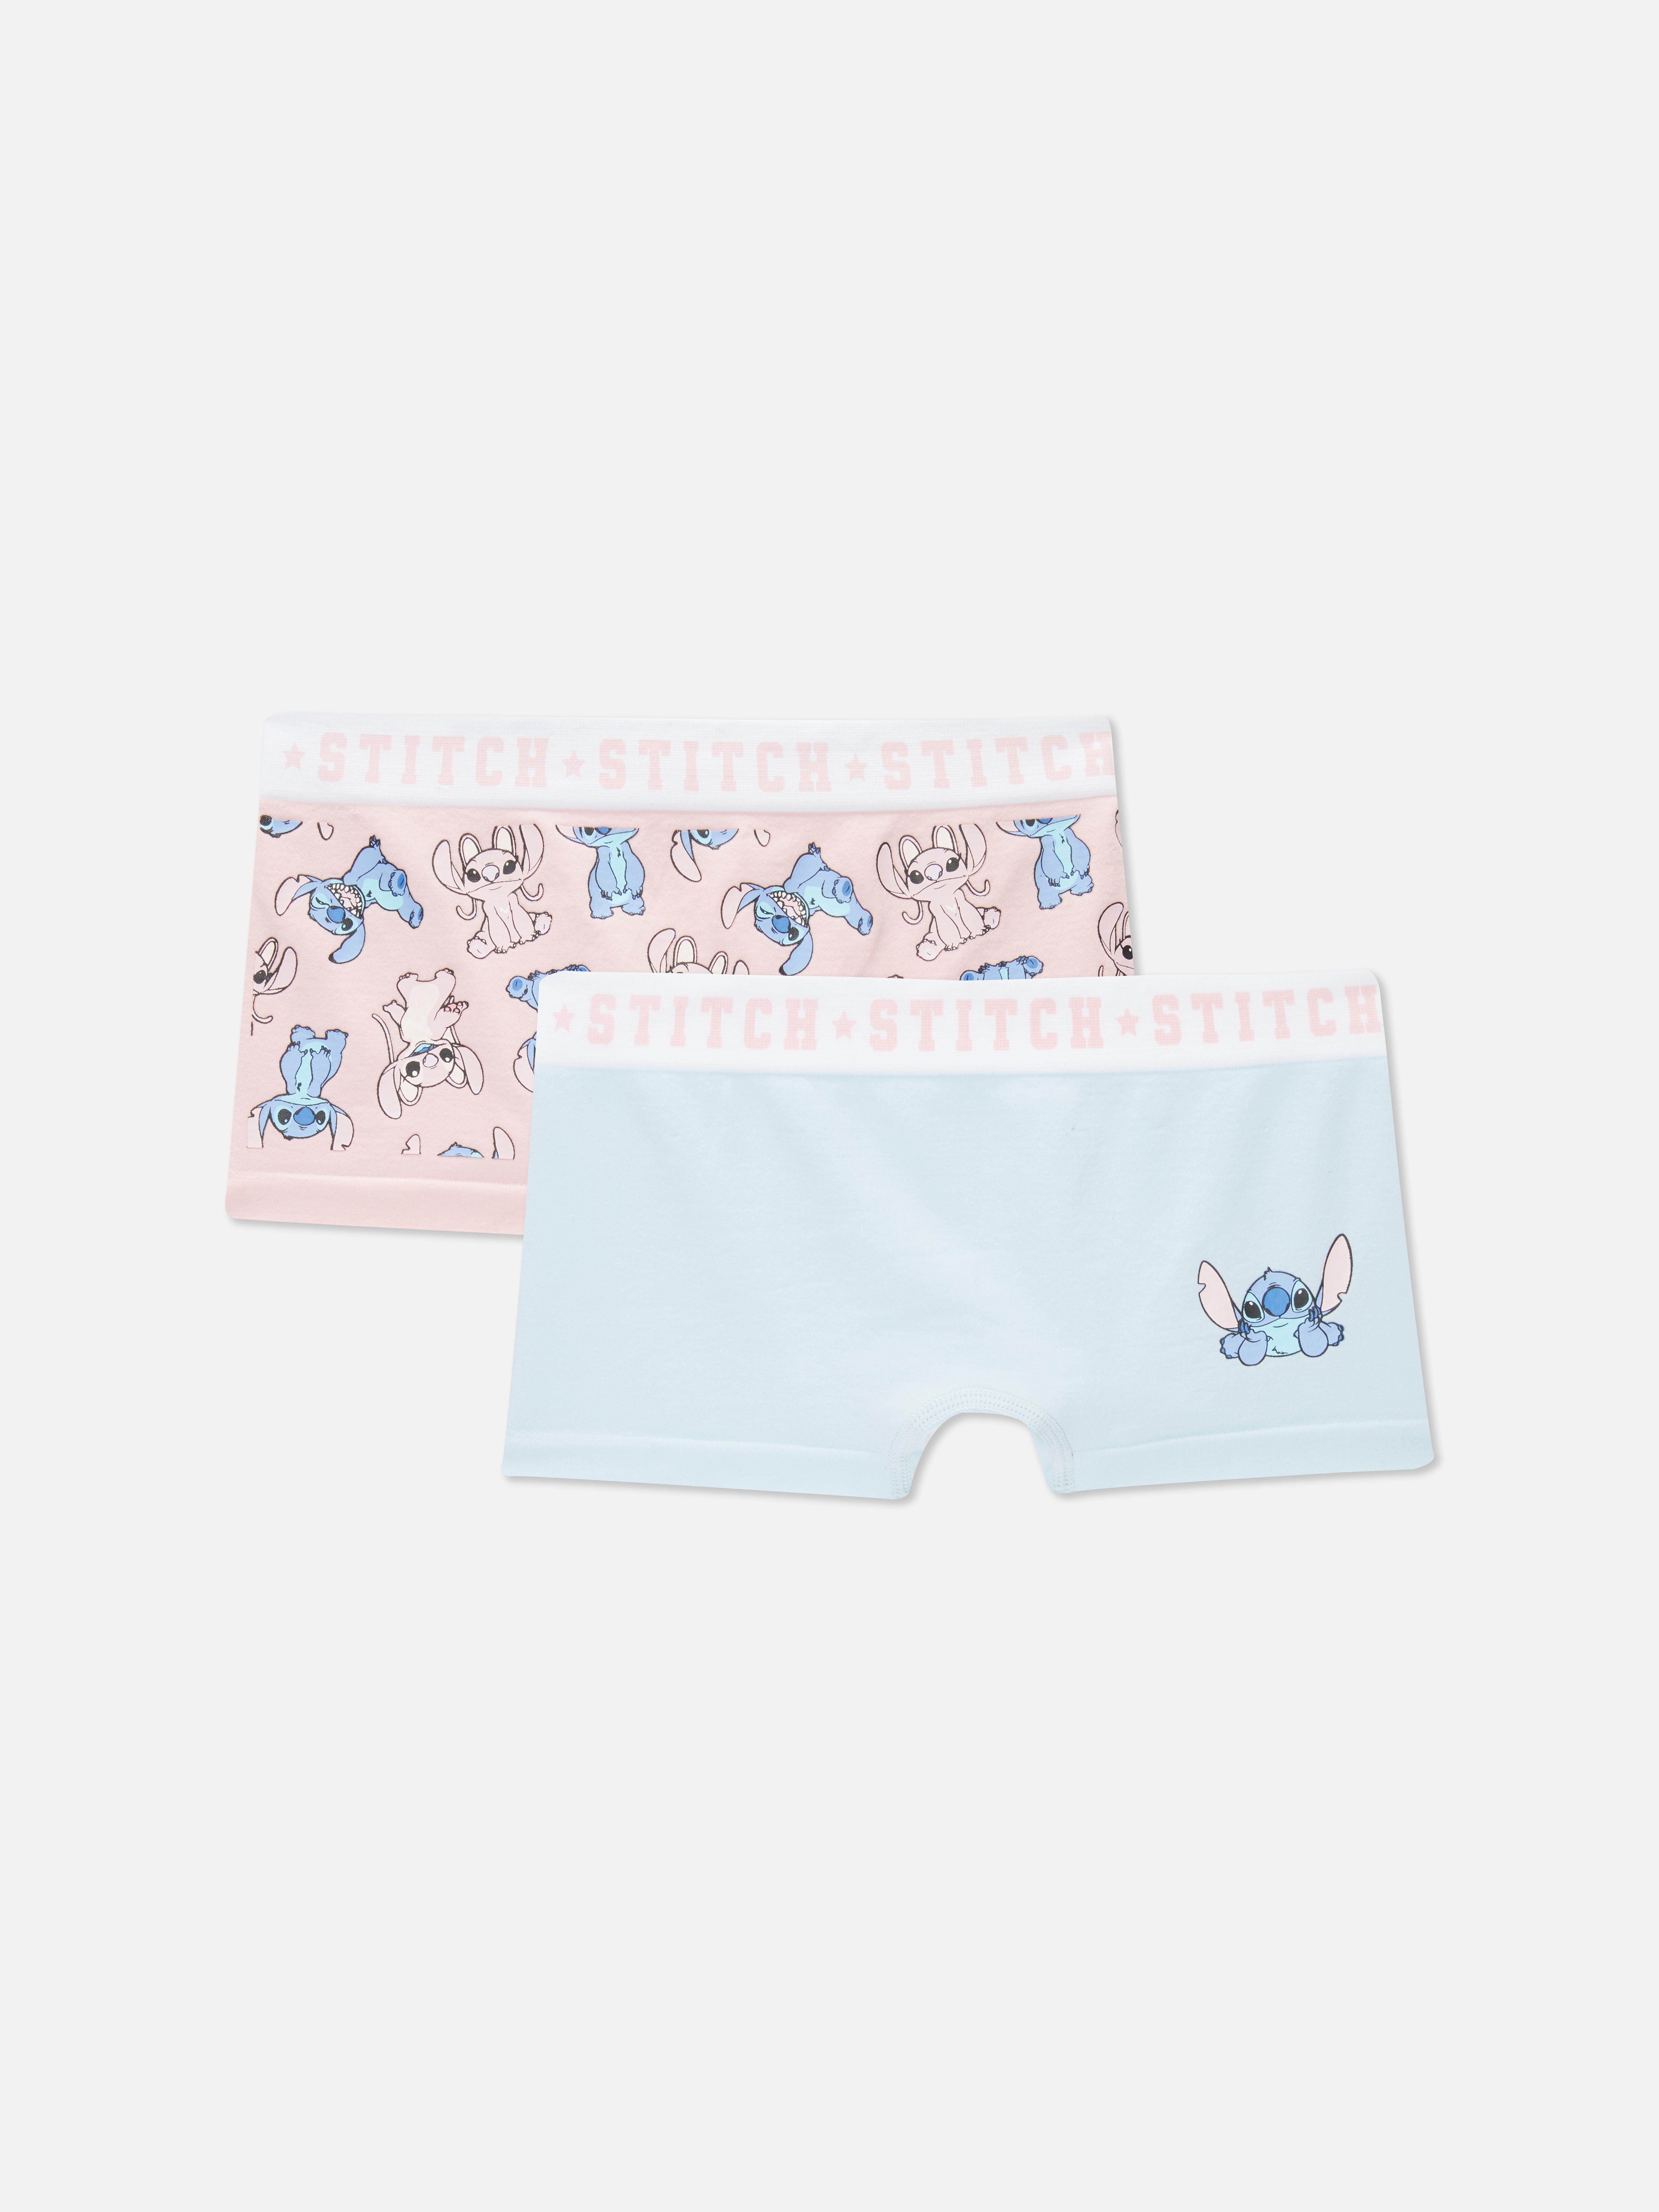 Disney's Lilo & Stitch Stitch Cotton Shorts Knickers Underwear 5-15 Years 6  Pack